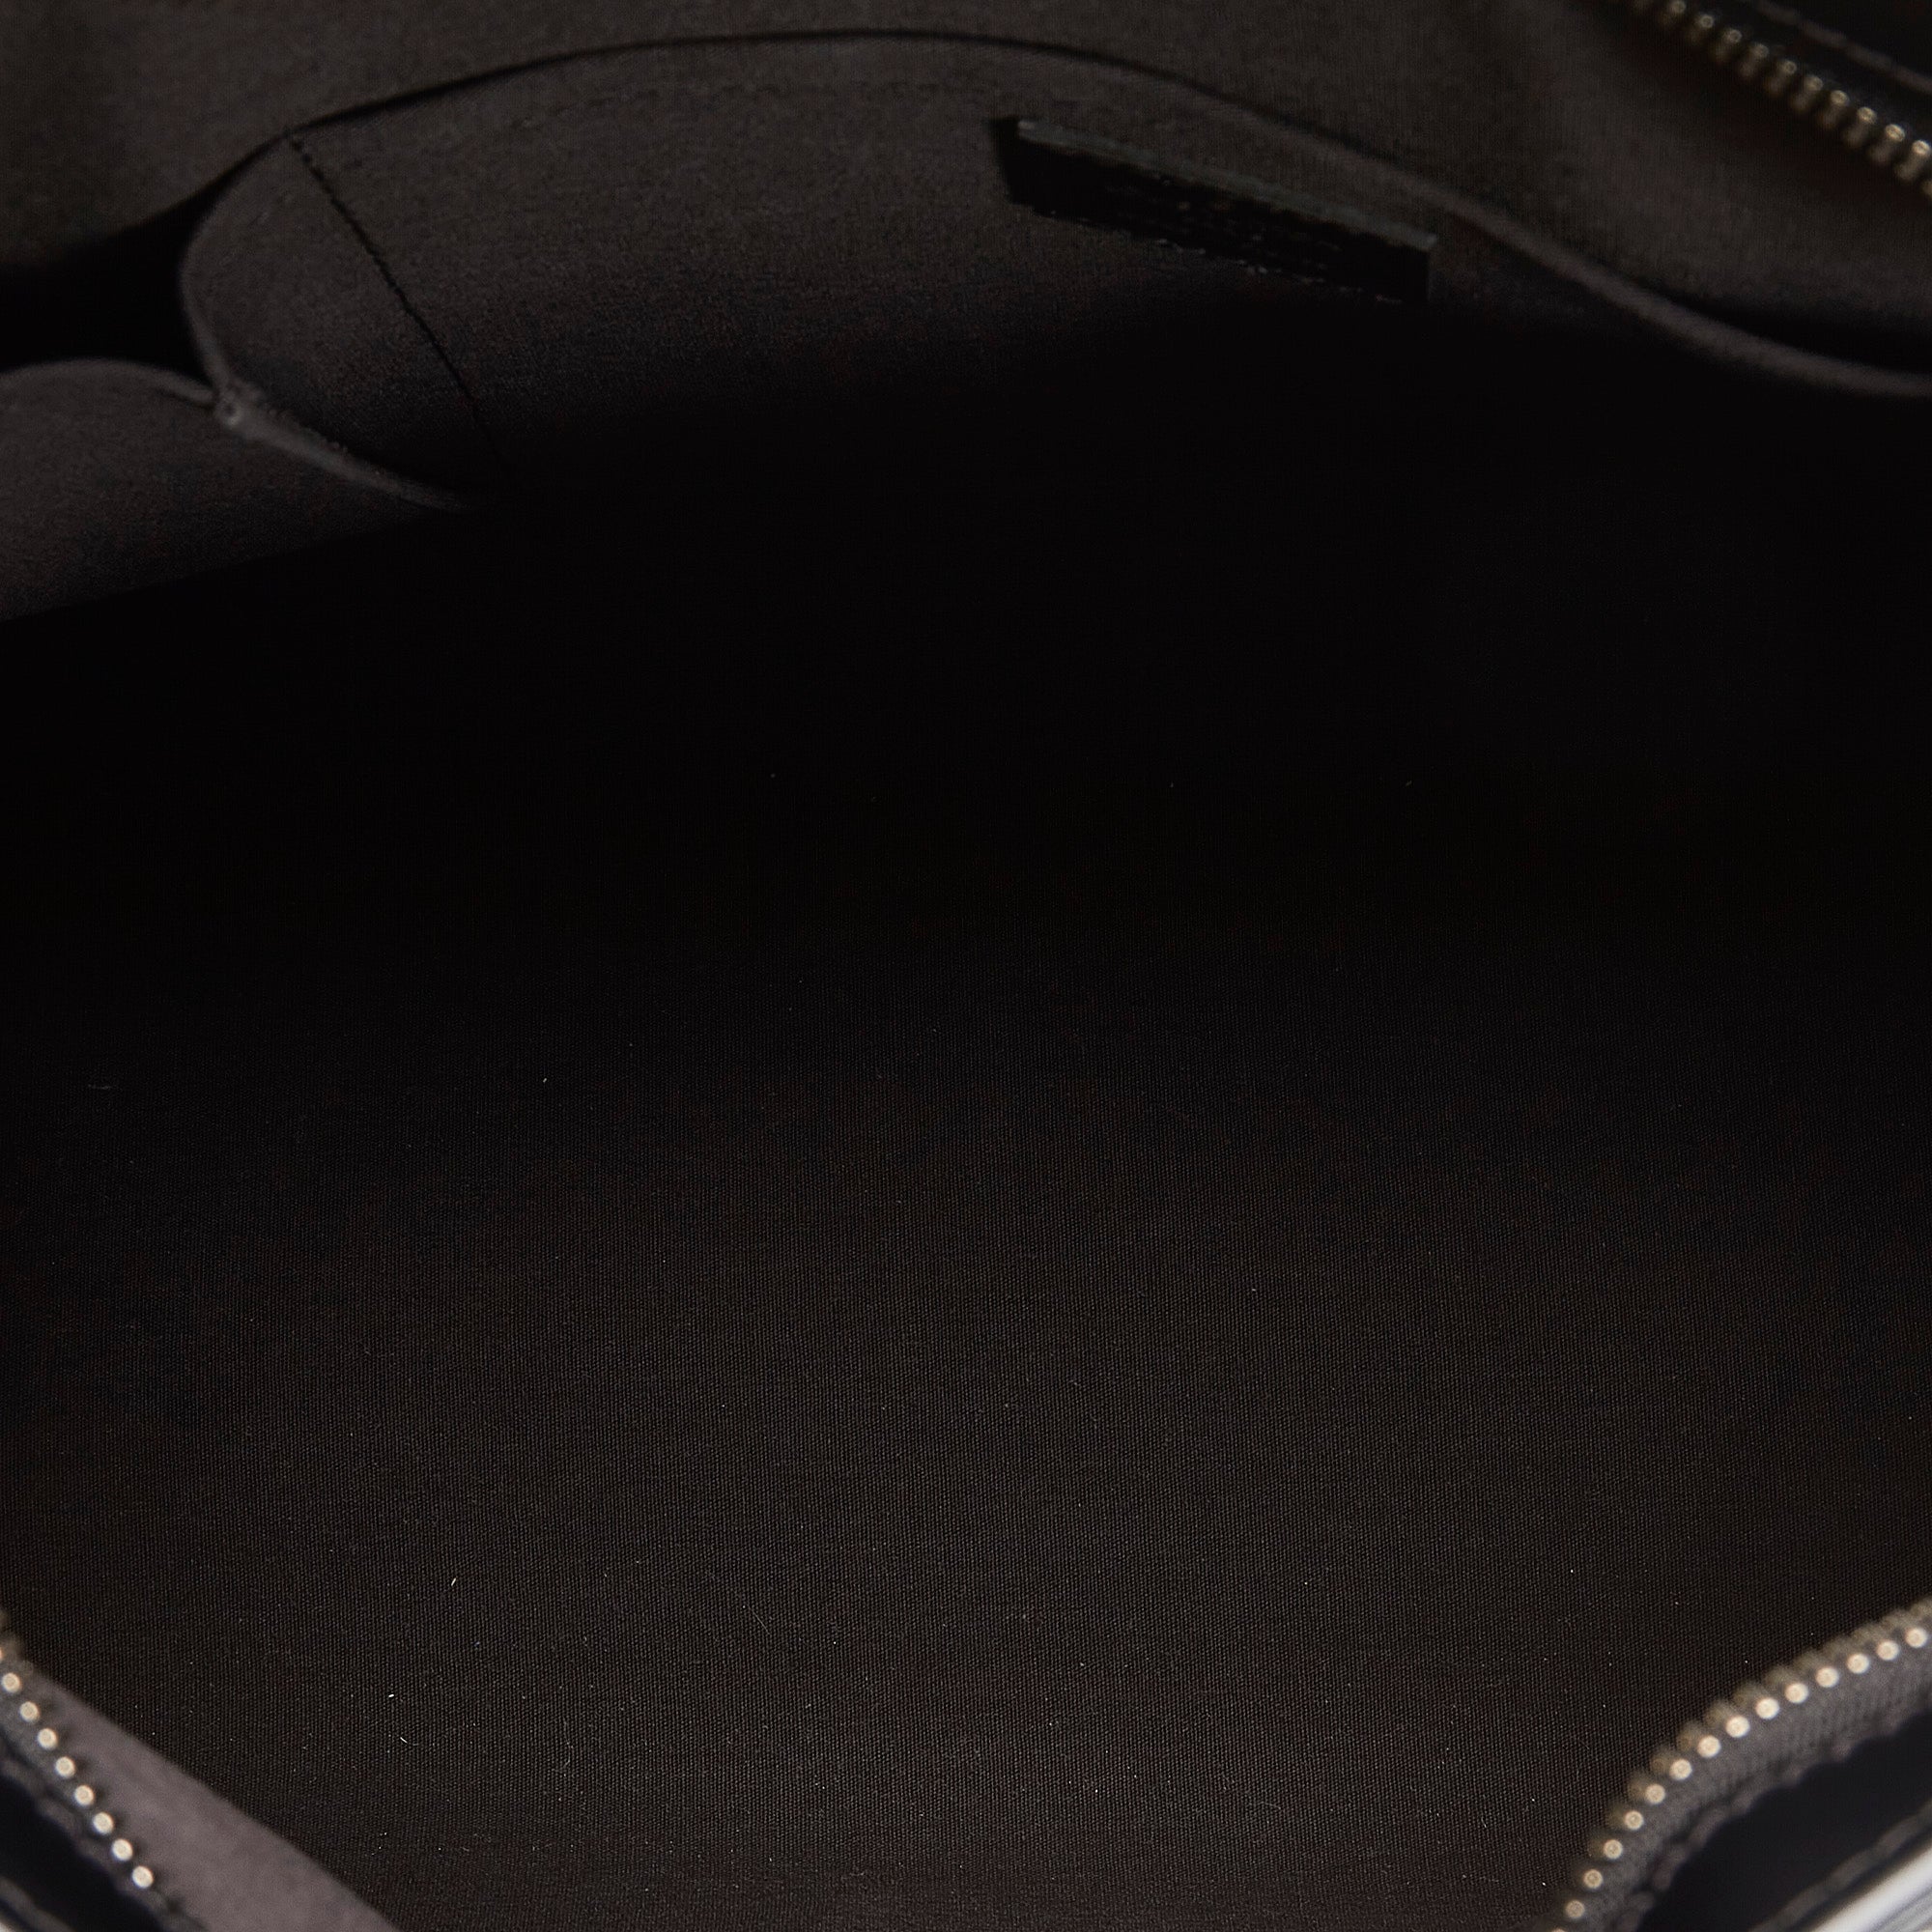 Louis Vuitton - Authenticated Madeleine Handbag - Leather Black Plain for Women, Good Condition